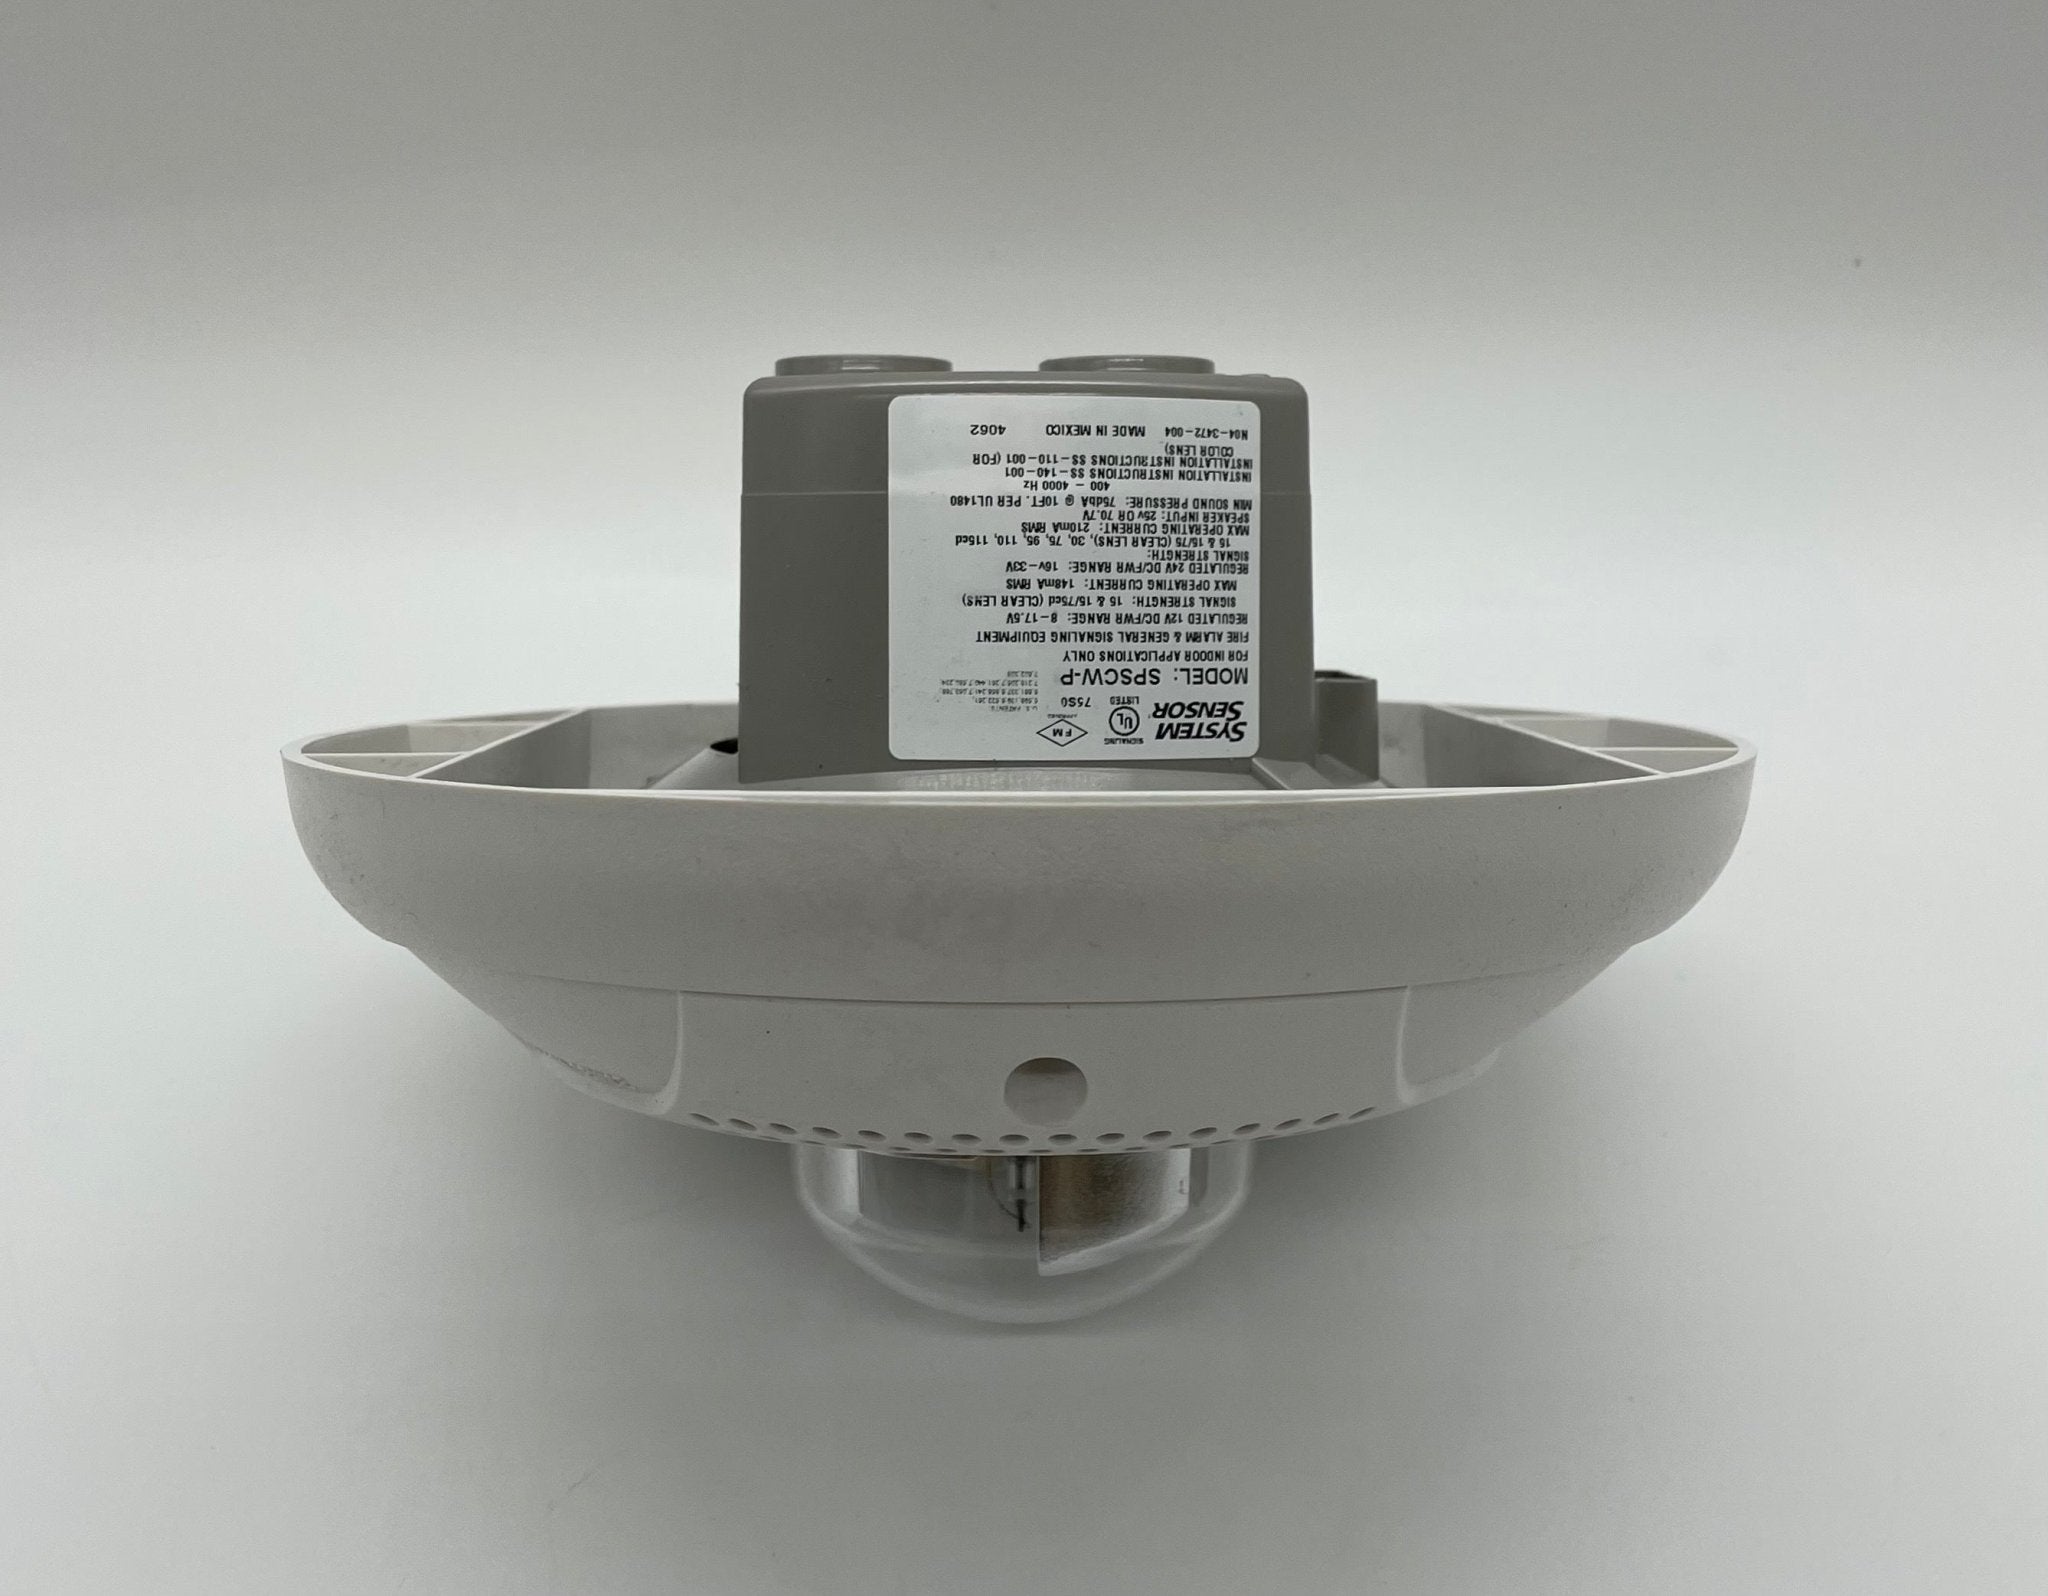 System Sensor SPSCW-P - The Fire Alarm Supplier